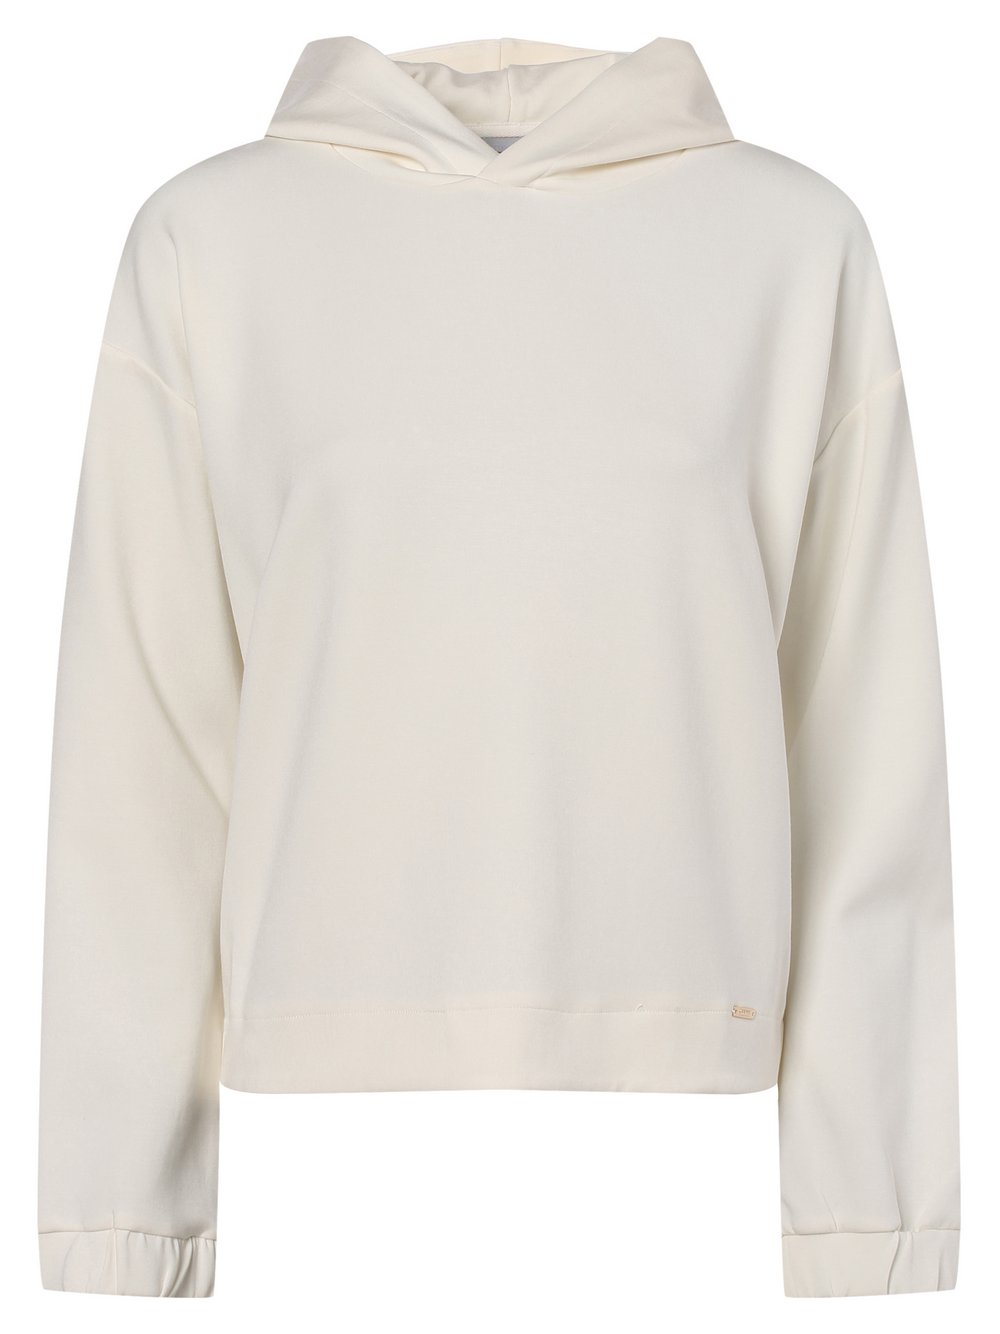 Cinque - Damska bluza z kapturem – CICamyo, beżowy|biały